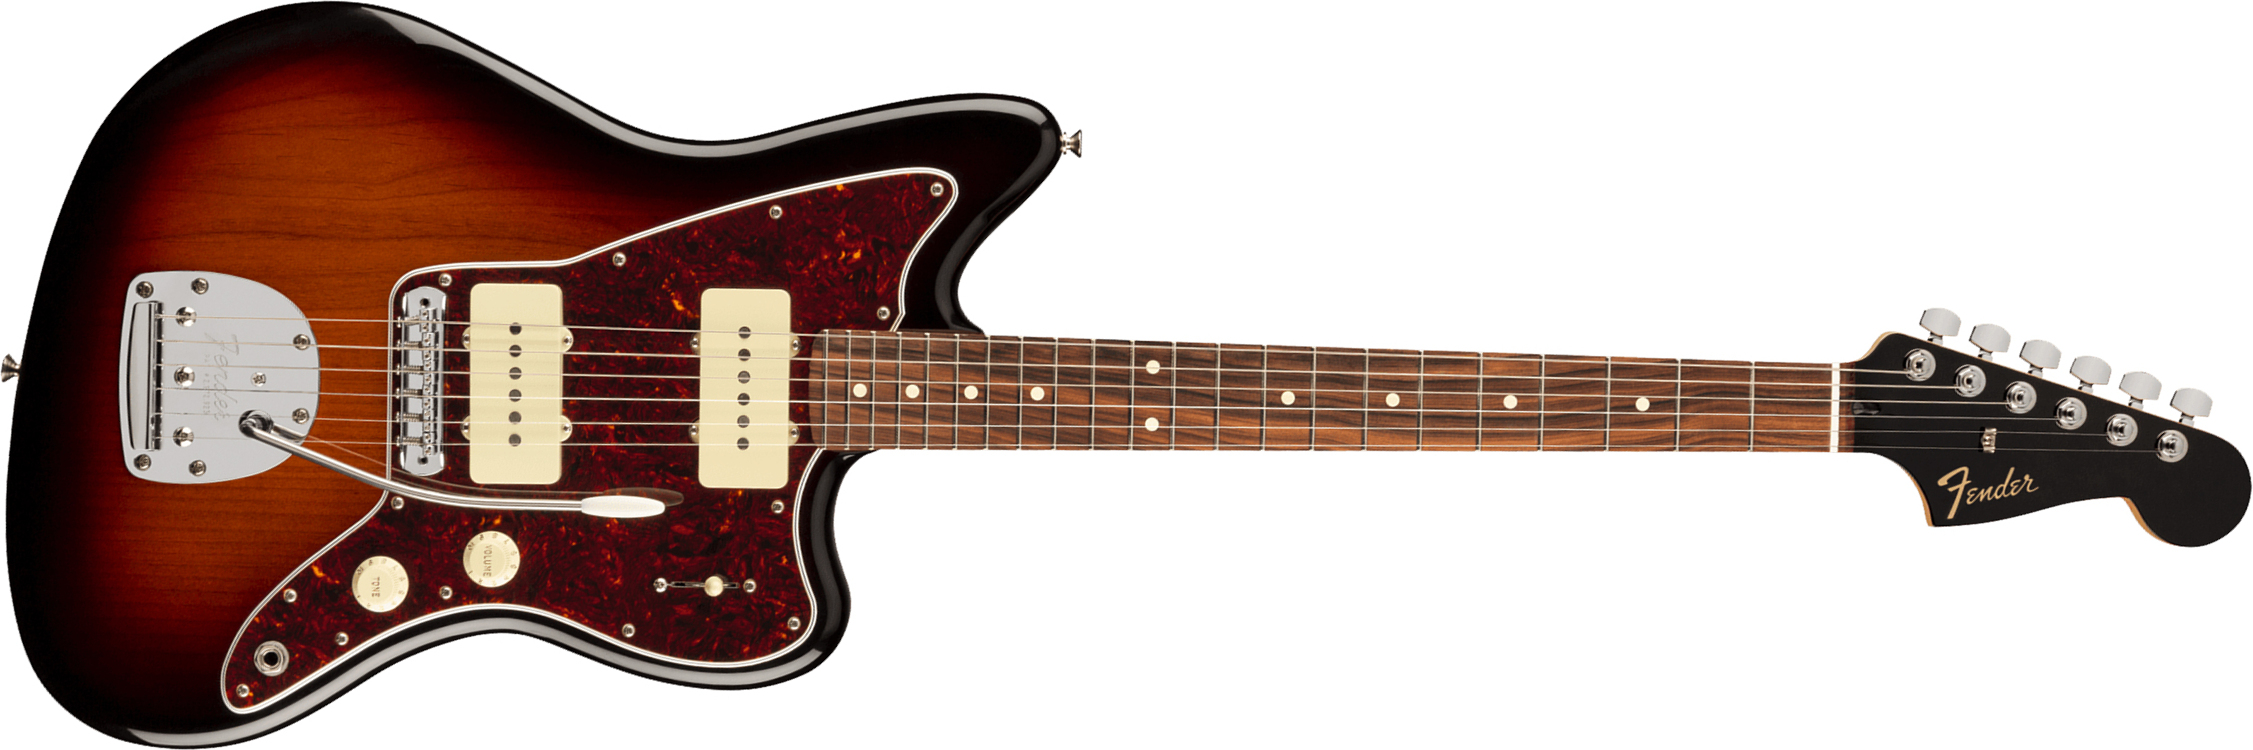 Fender Jazzmaster Player Ltd 2s Trem Pf - 3-color Sunburst - Guitarra electrica retro rock - Main picture